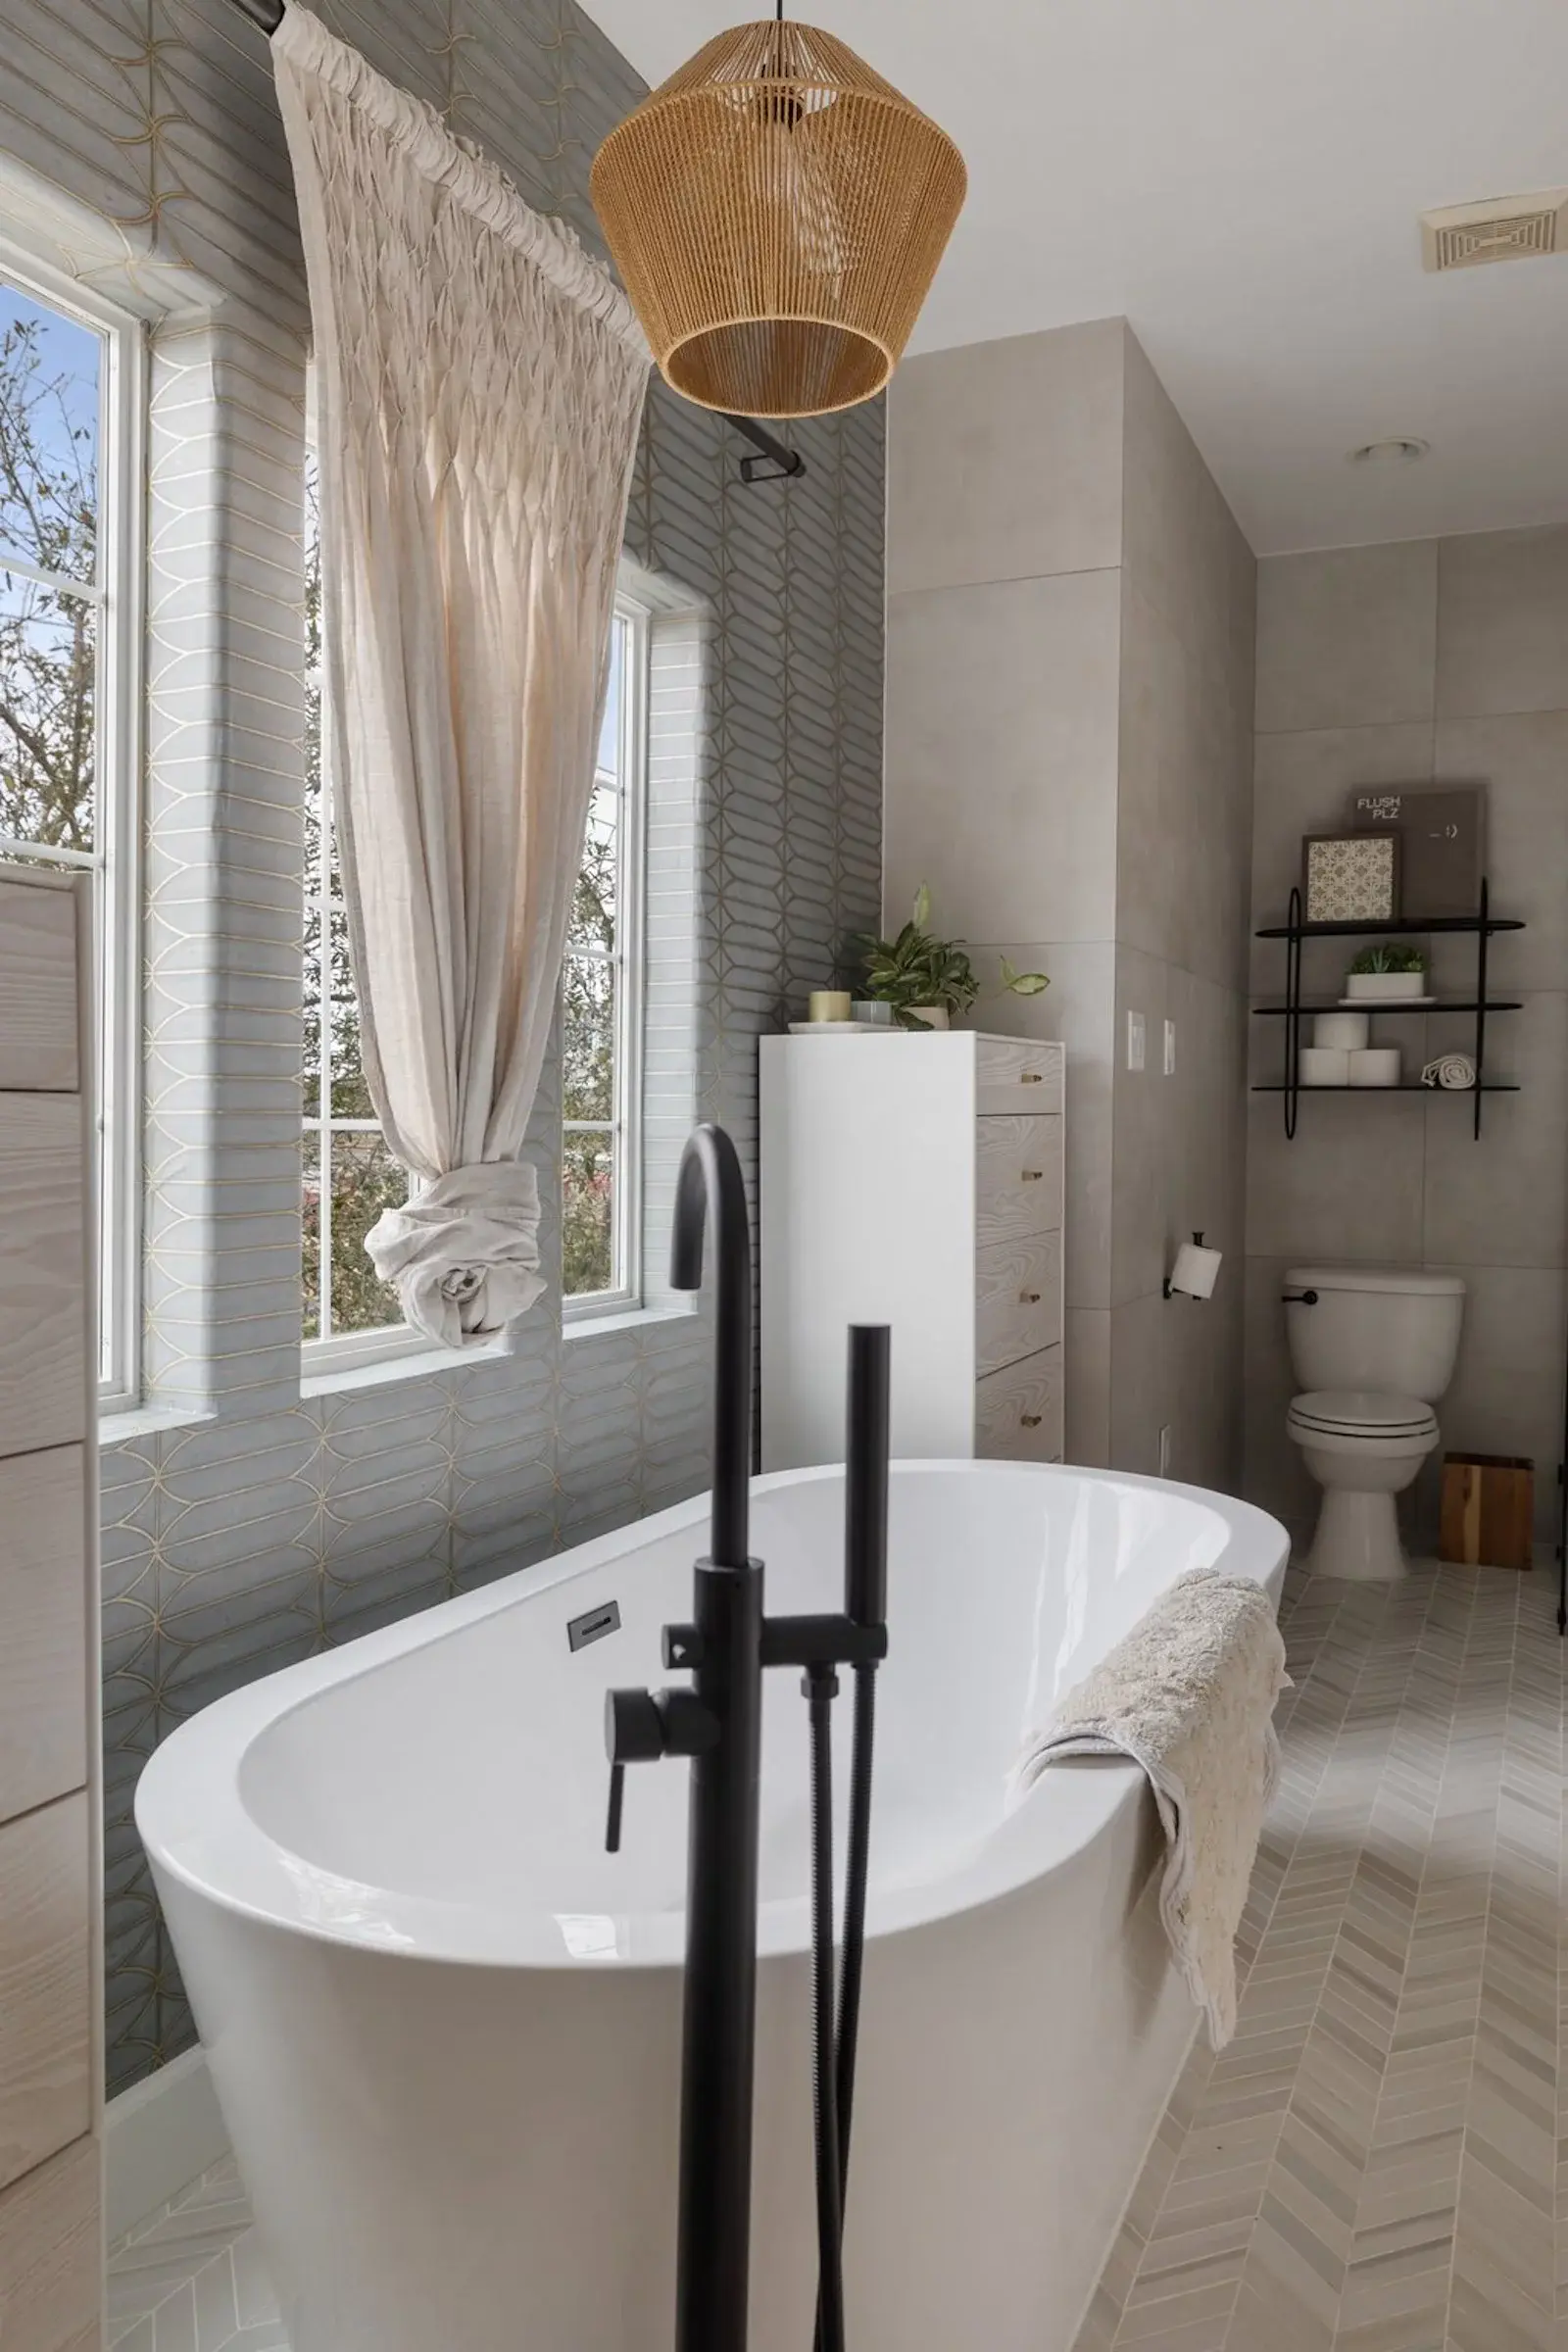 soaking tub with floor mount tub filler in black finish in bathroom remodel in houston